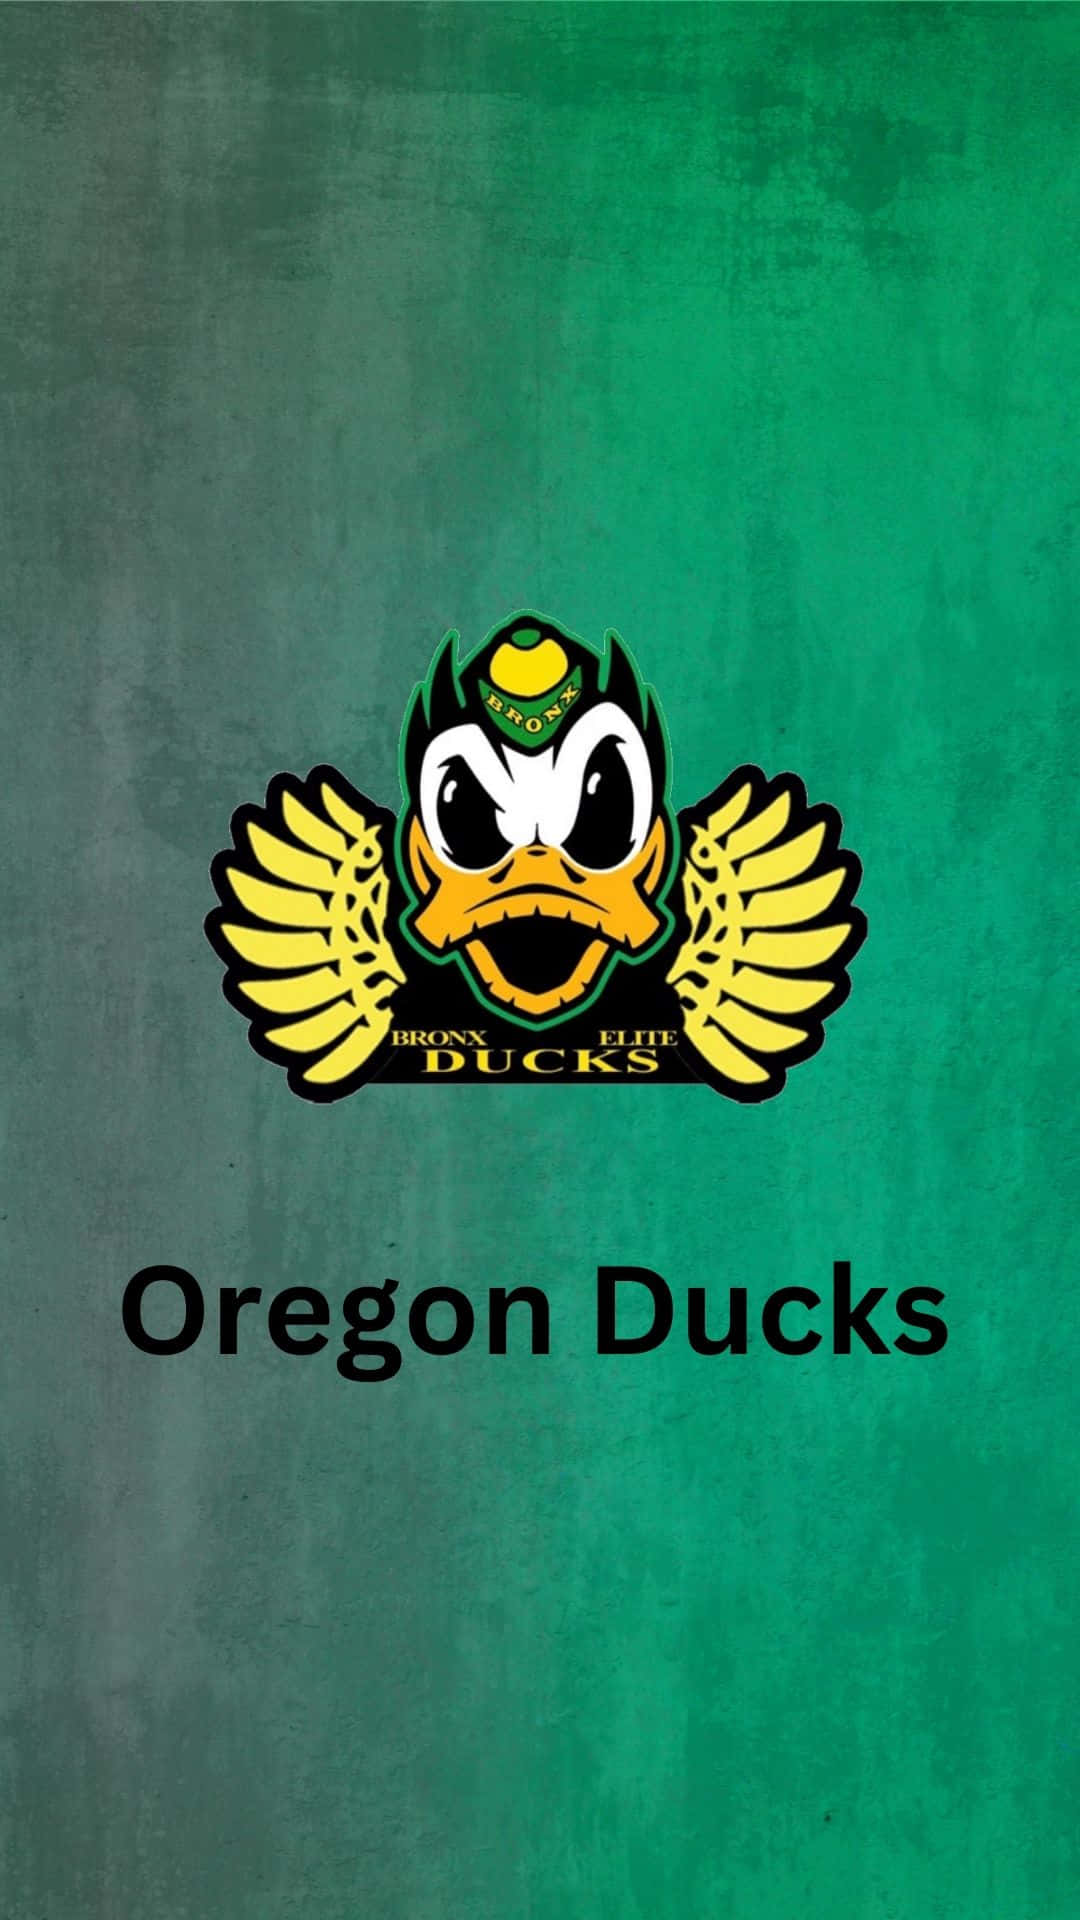 Oregon Ducks Wallpapers 56 images